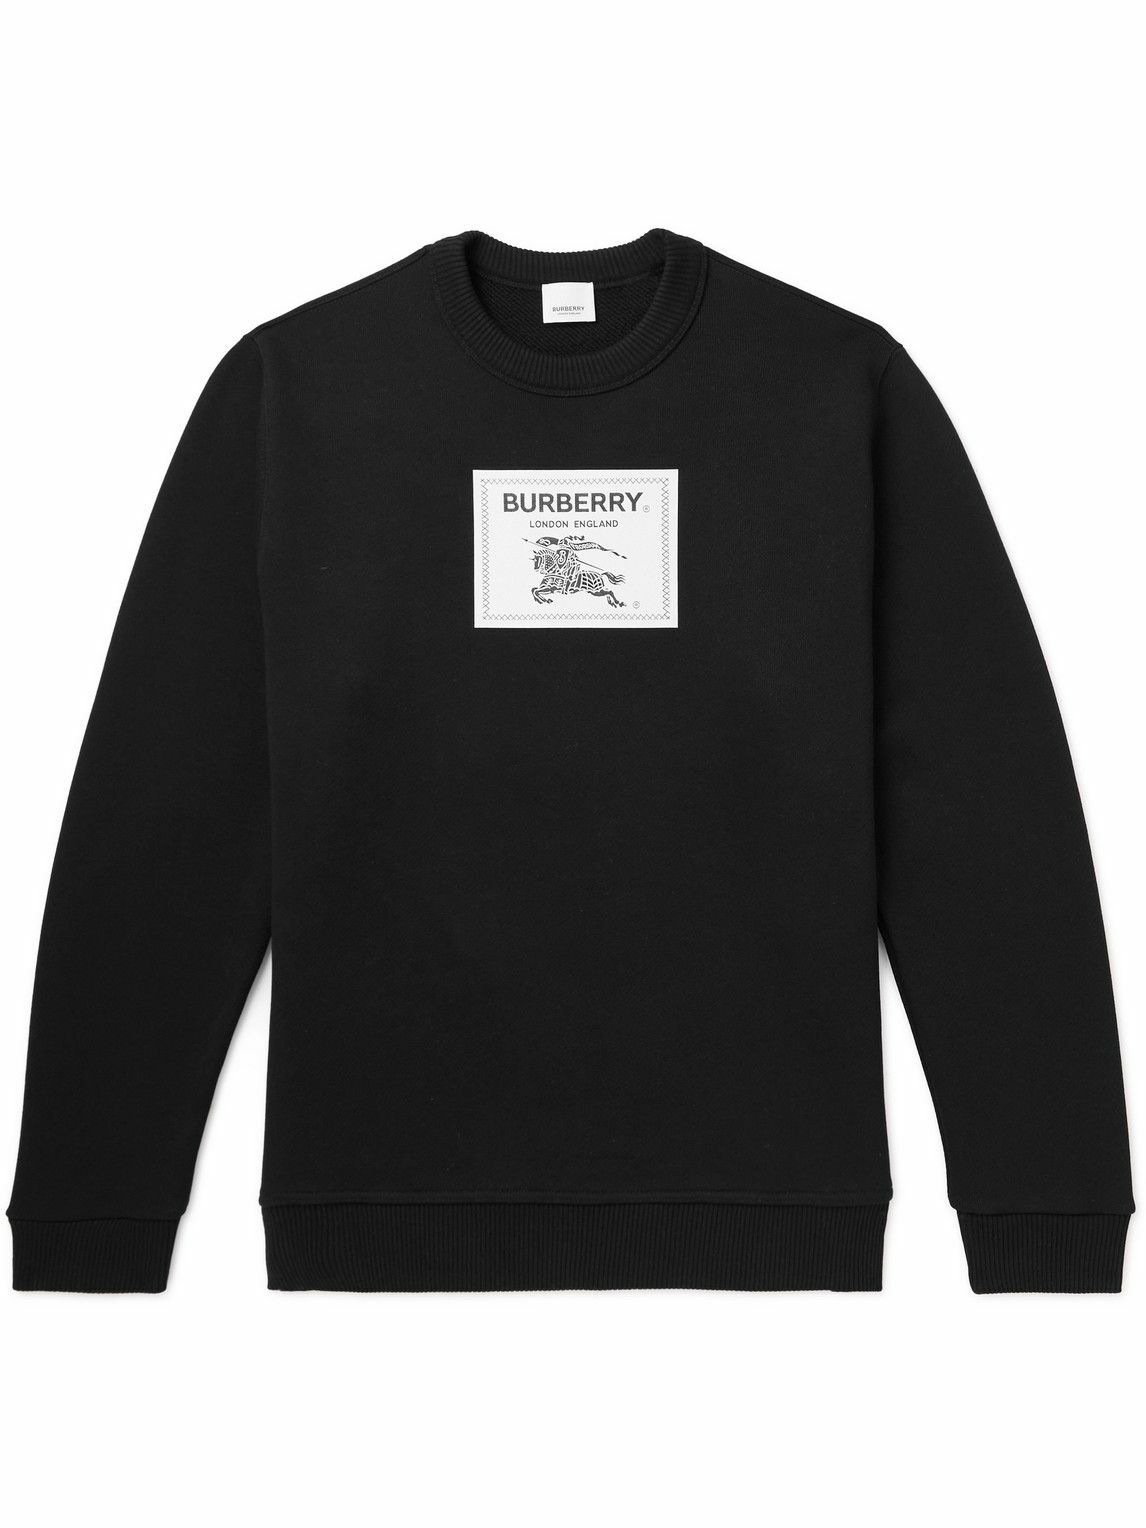 Burberry - Logo-Appliquéd Cotton-Jersey Sweatshirt - Black Burberry